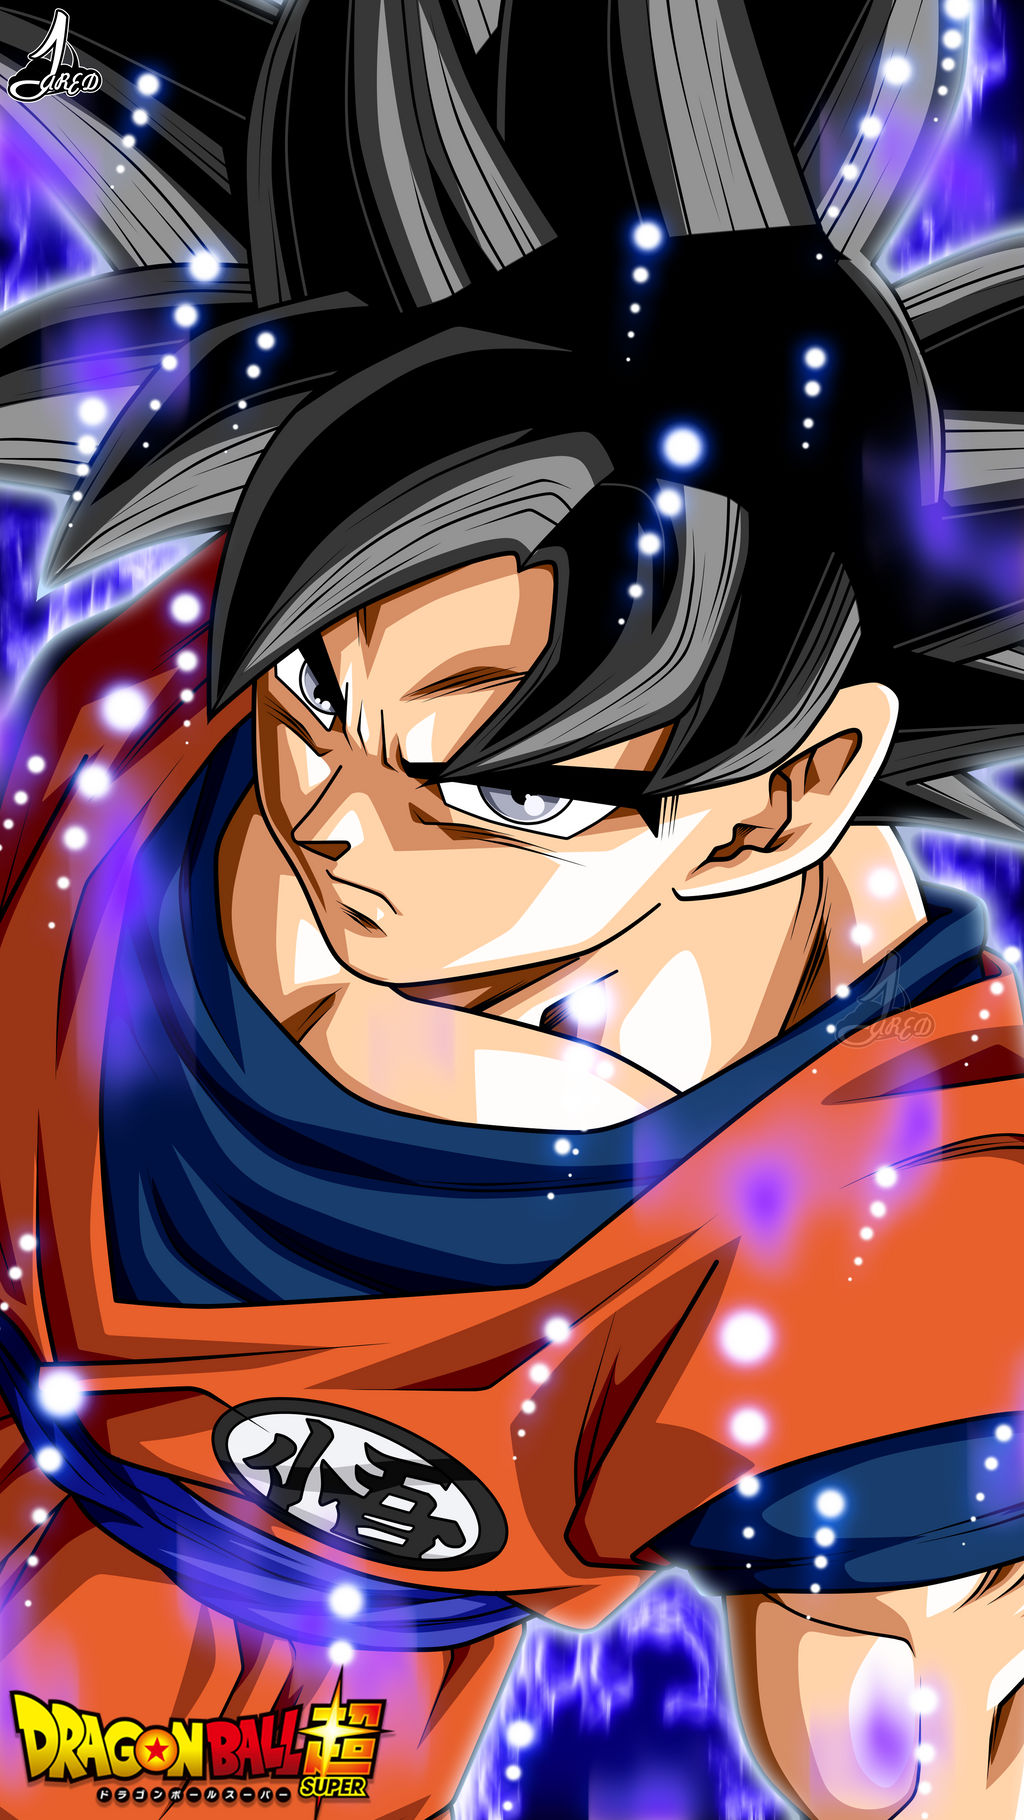 Goku Ultra Instinto (Migette No Gokui) DBS by jaredsongohan on DeviantArt